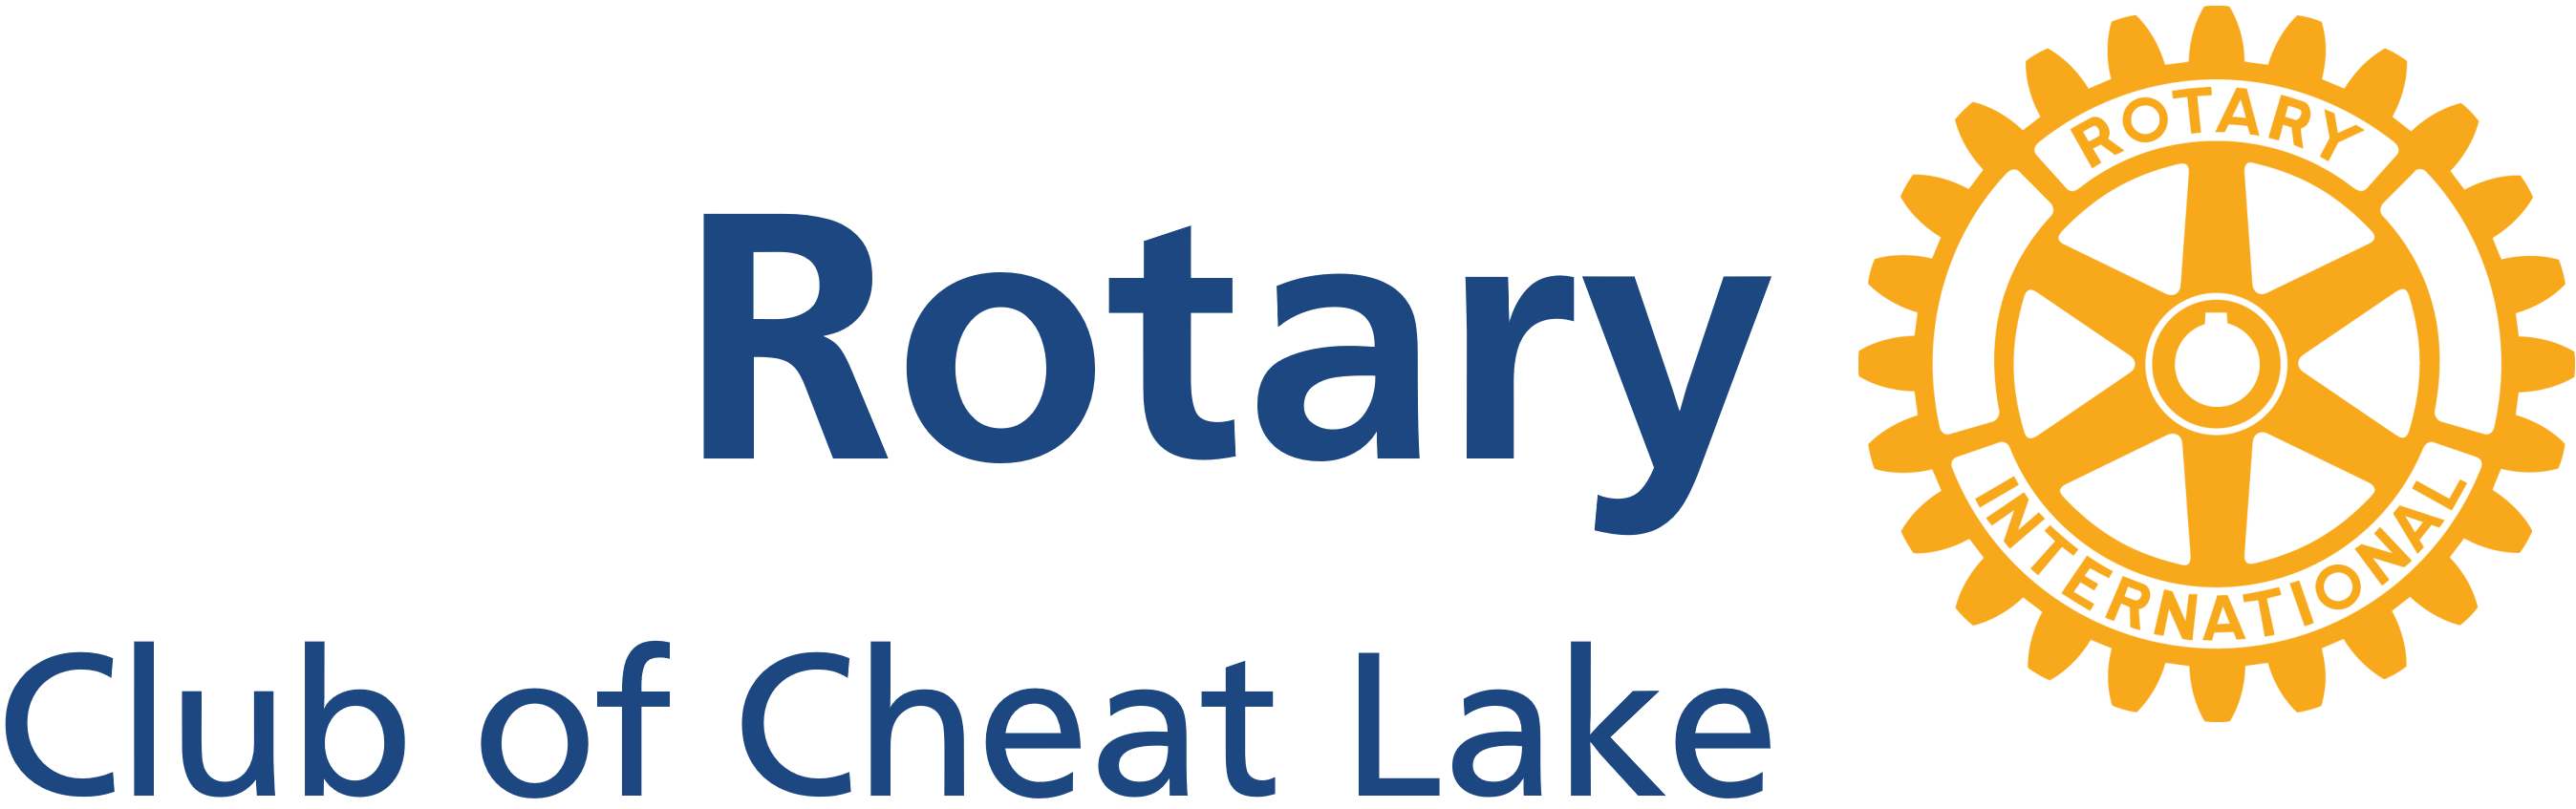 Rotary Club of Cheat Lake logo